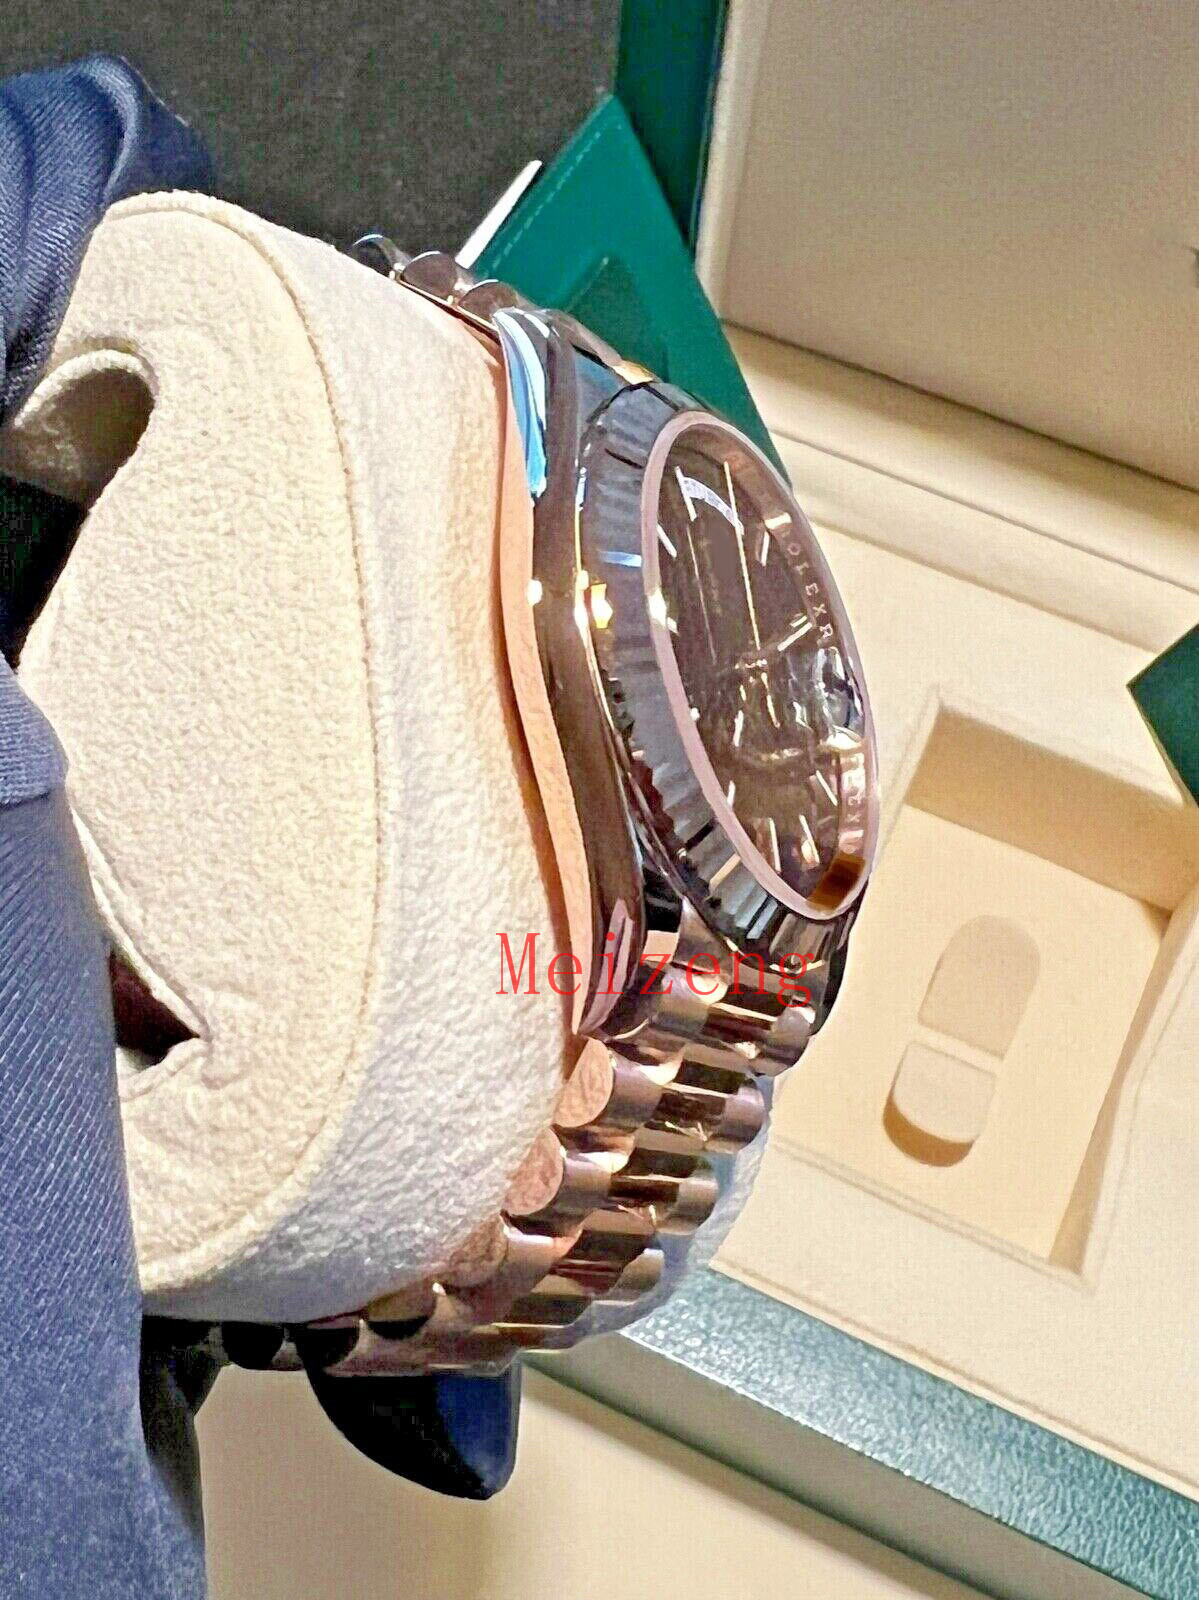 Luxury Wristwatch Day Date President 228235 18K Rose Gold Chocolate Motif Dial 40mm Menatic Watch-2237W